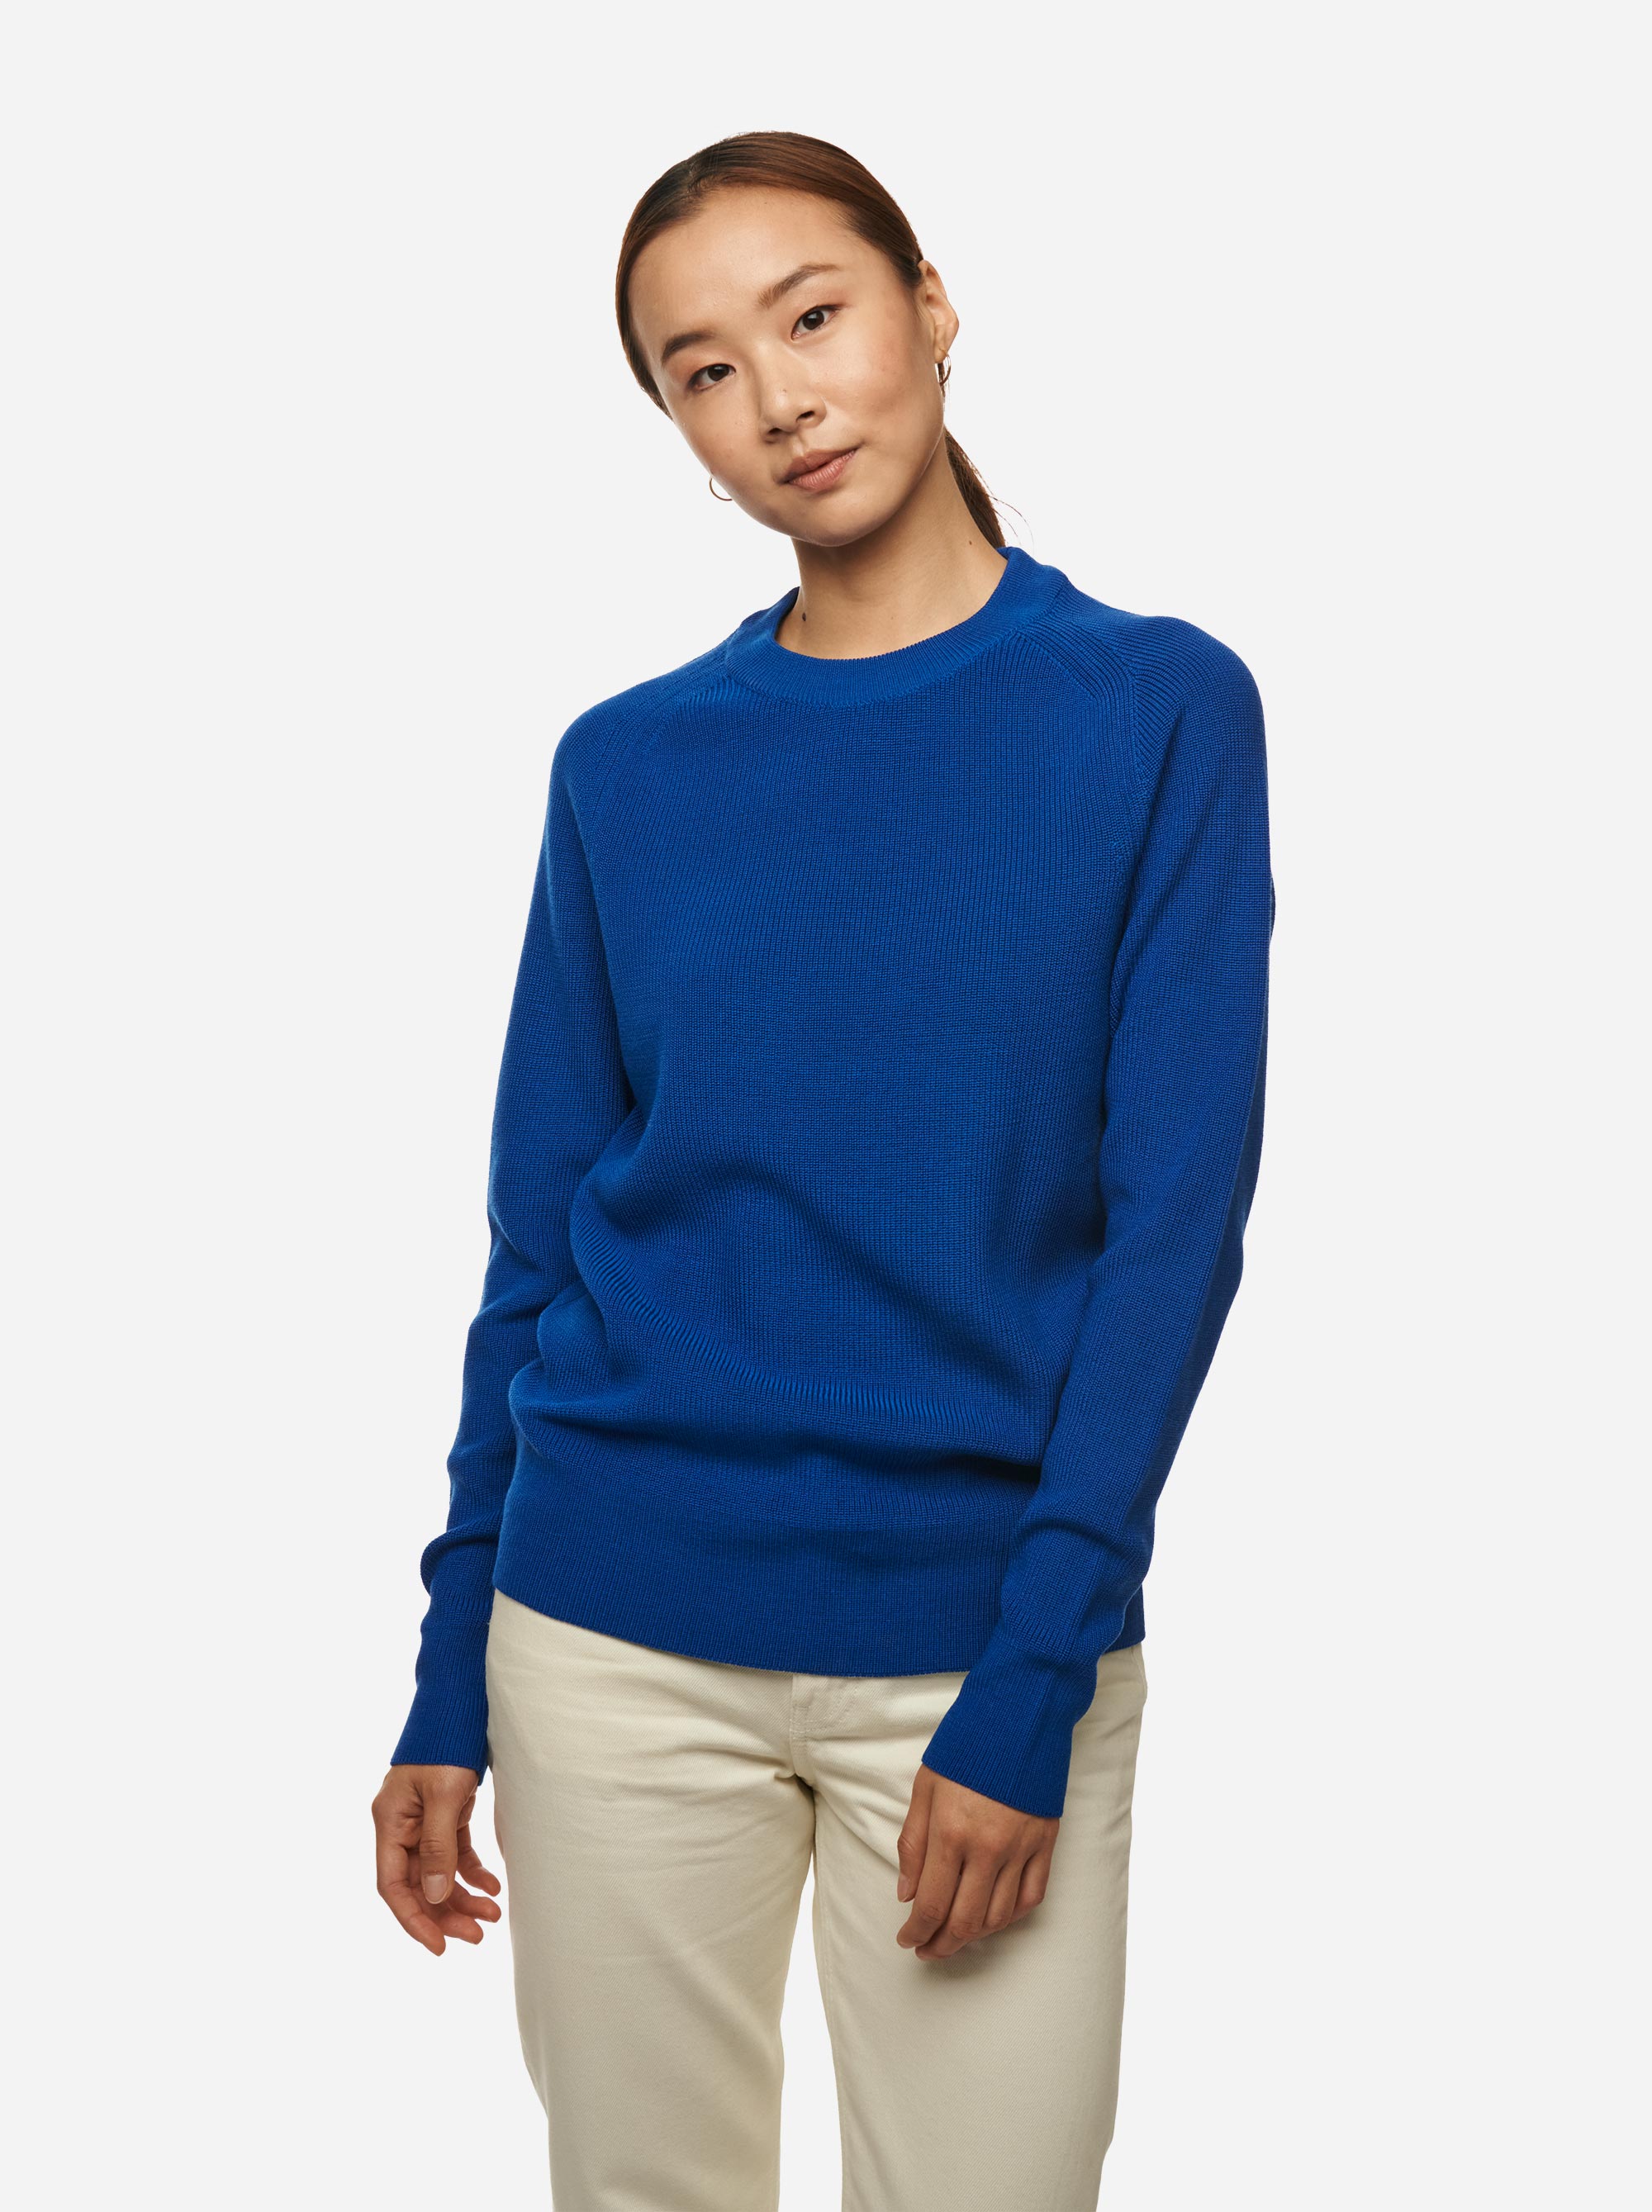 Teym - Crewneck - The Merino Sweater - Women - Cobalt Blue - 2